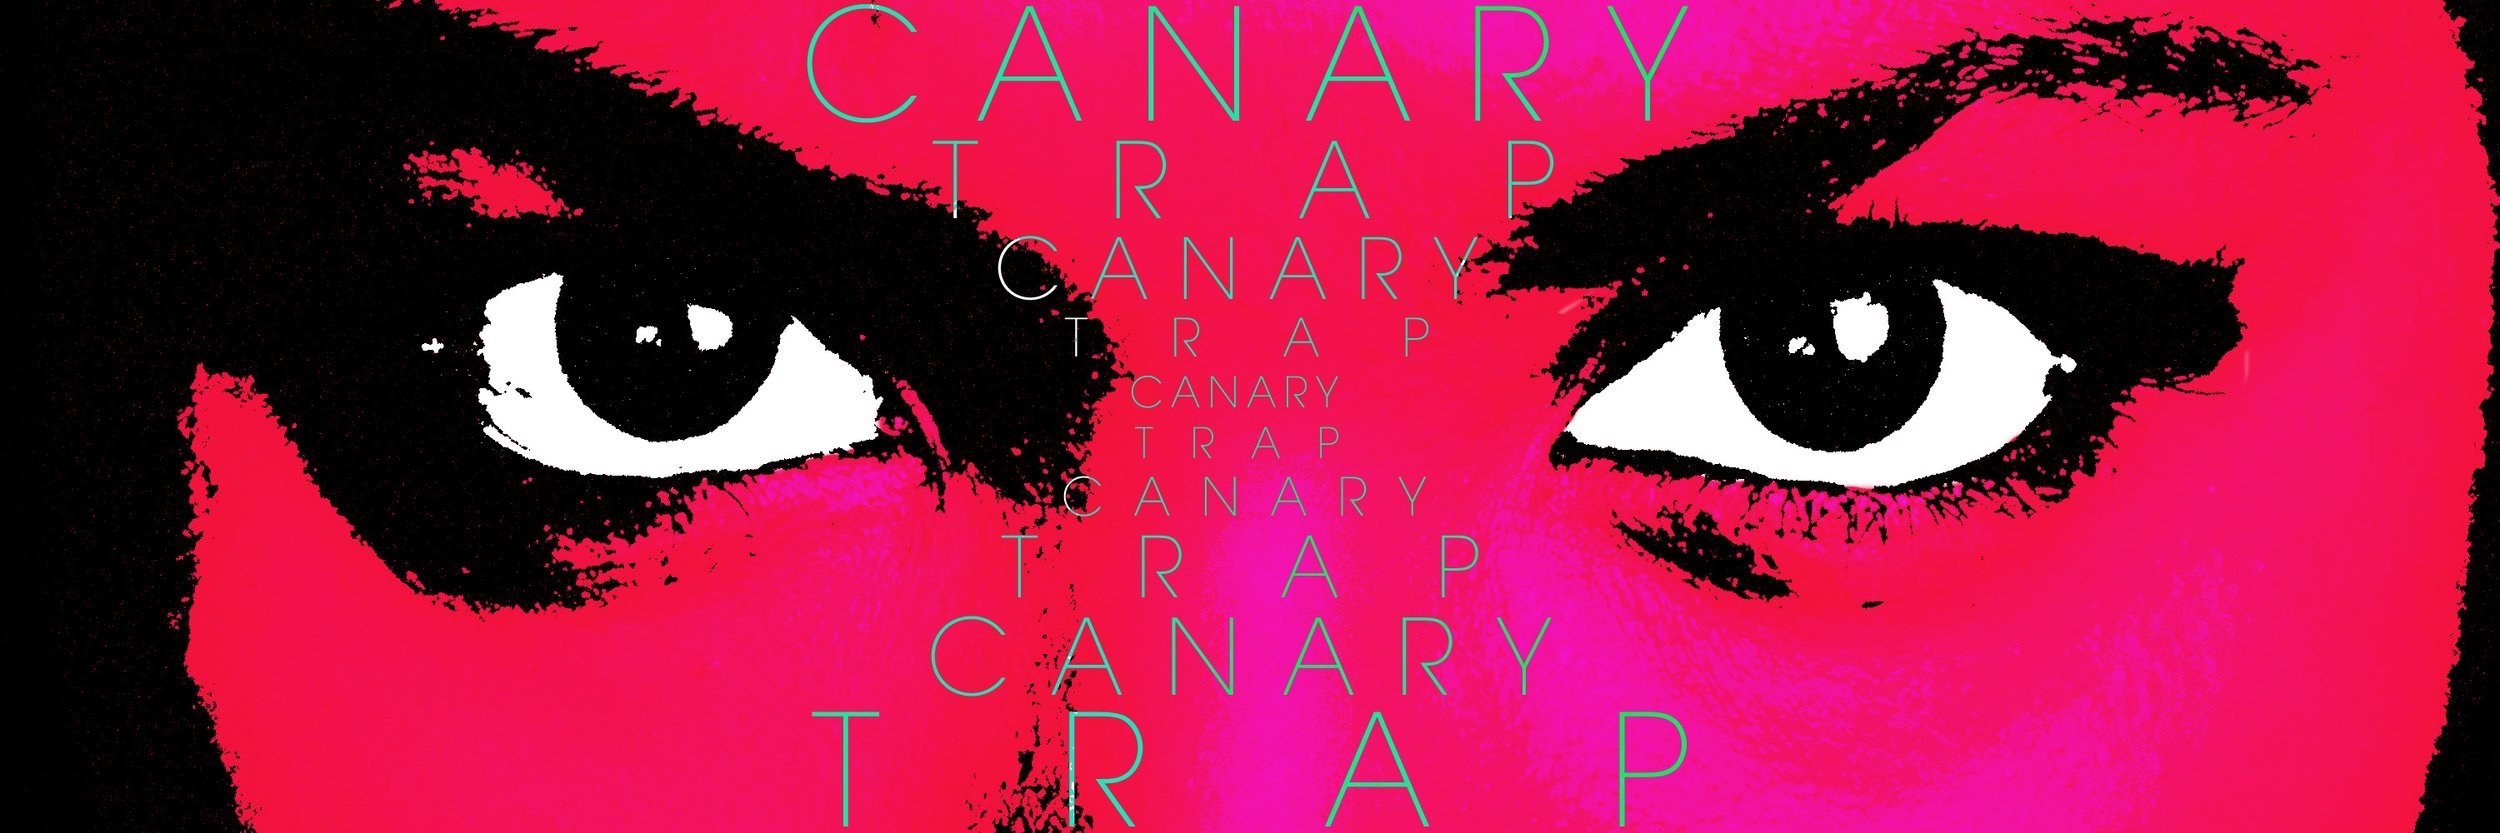 Canary Trap Promotional Image with Mieko Gavia